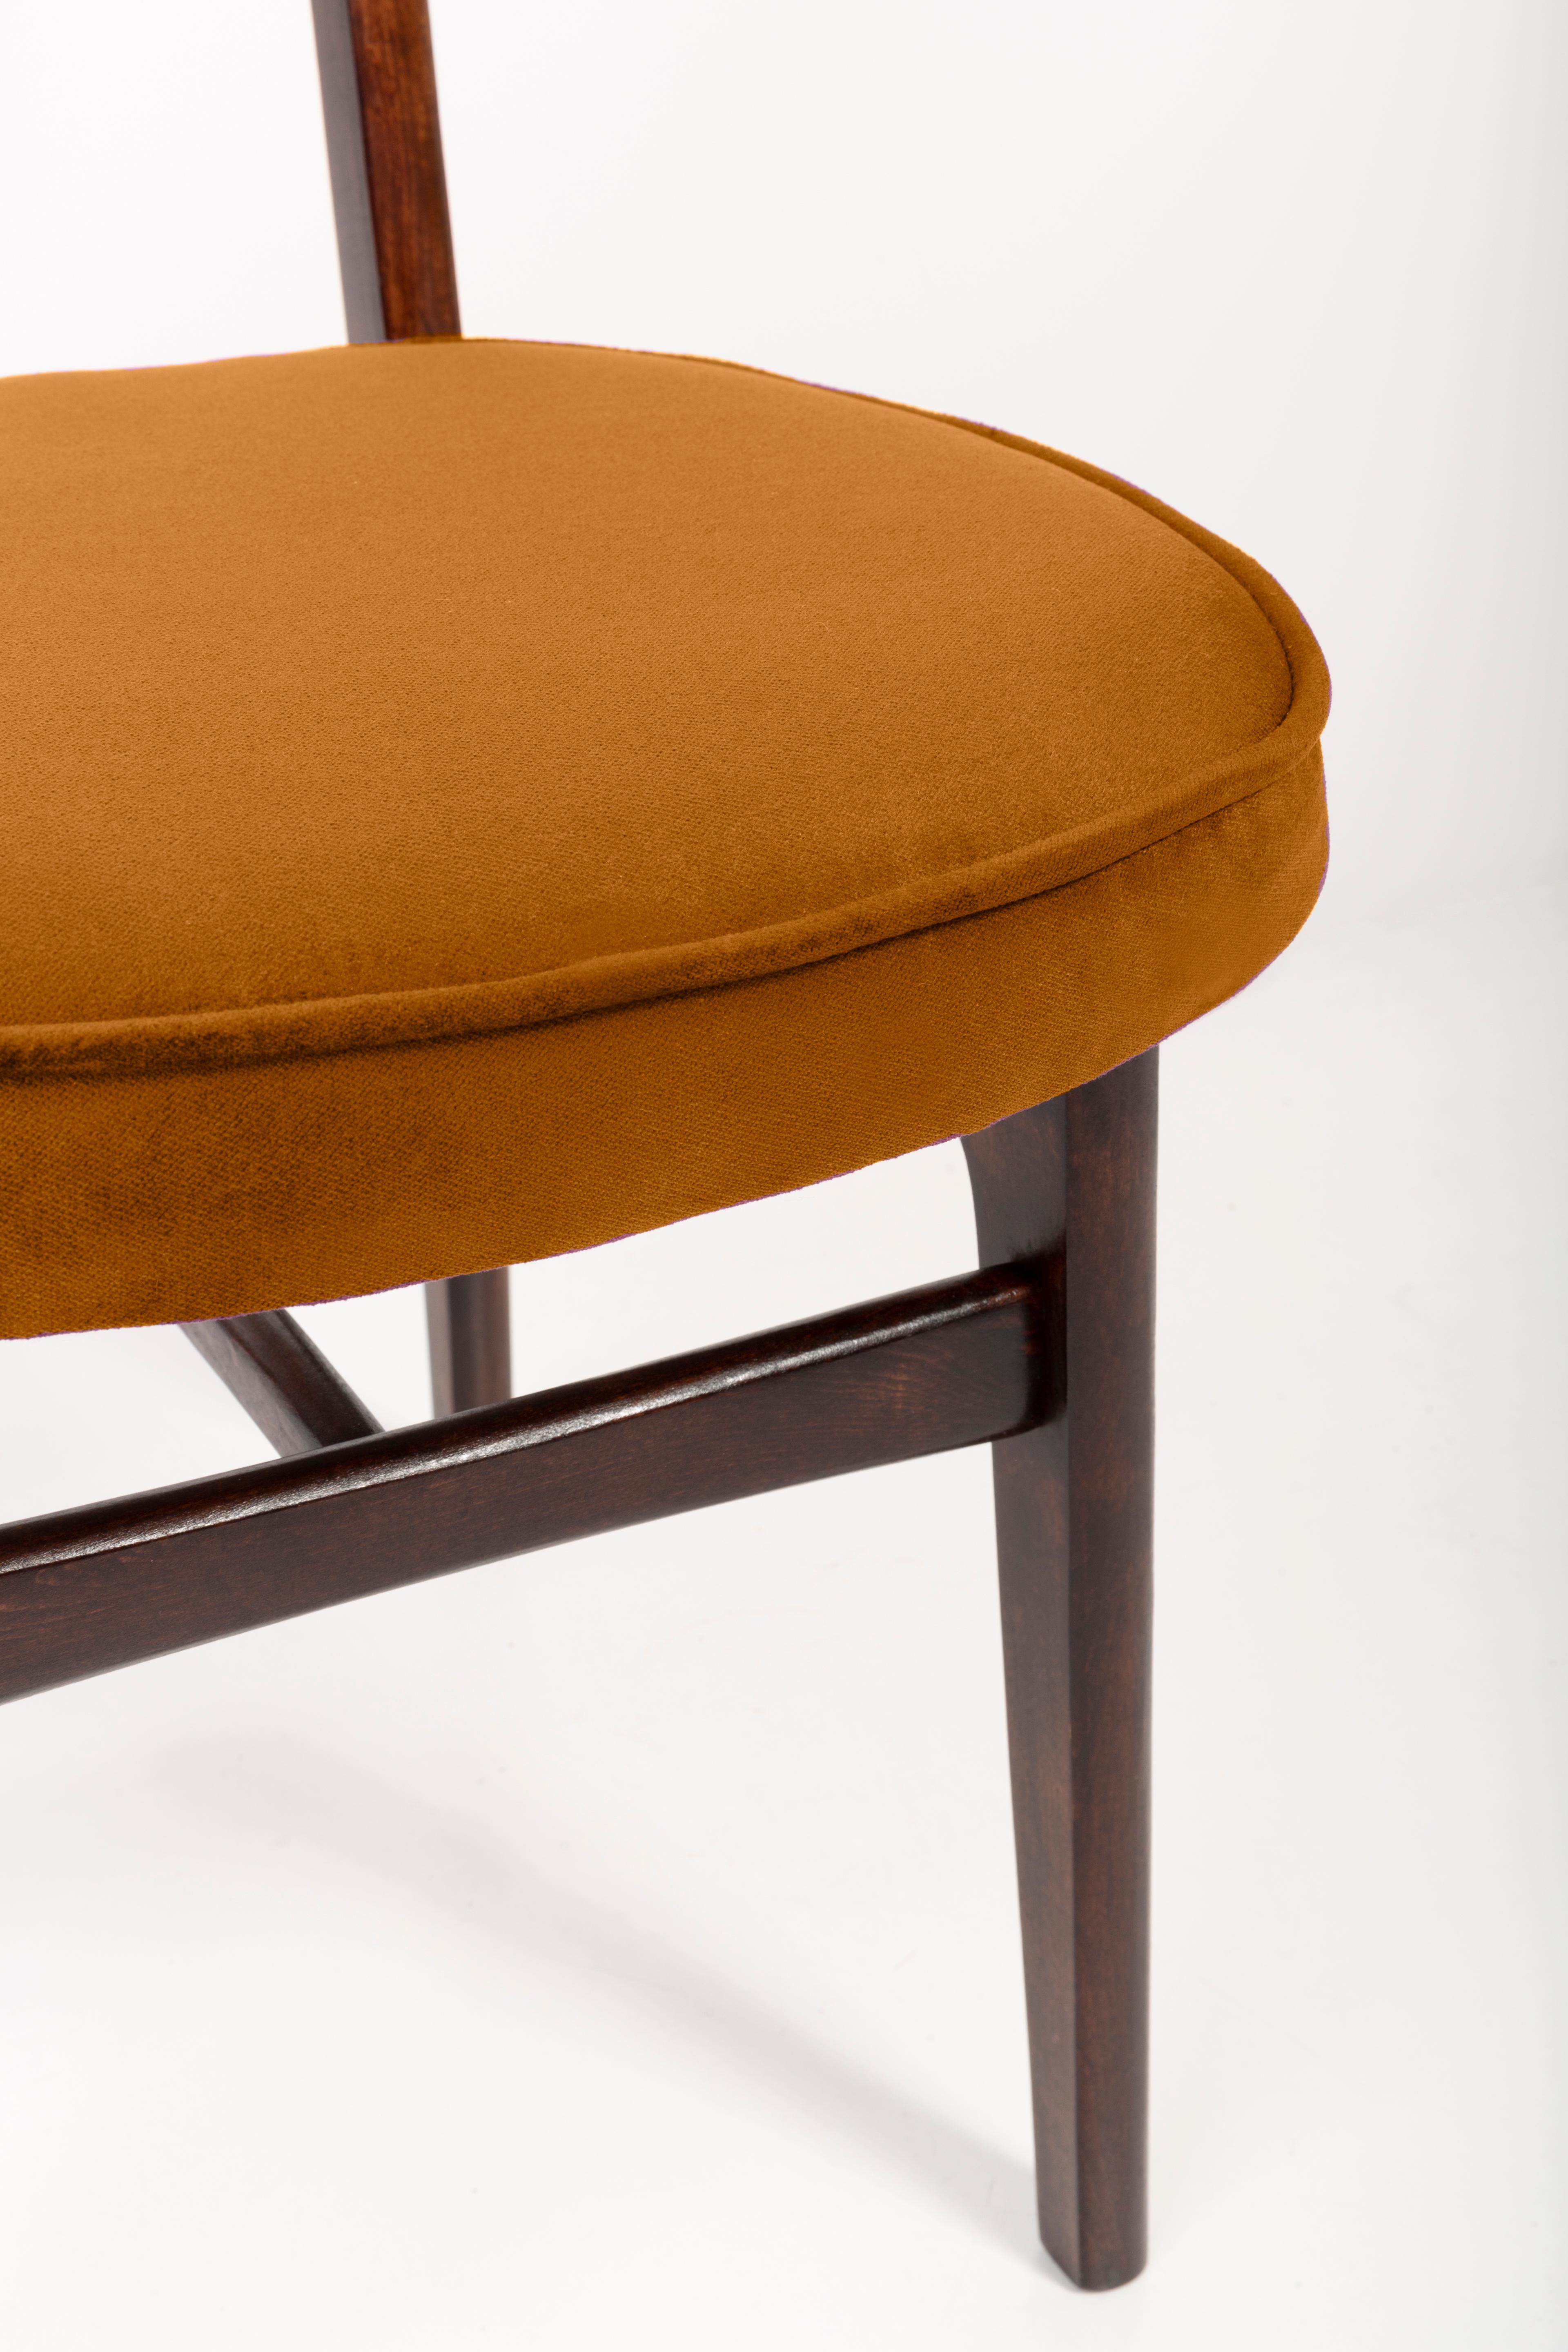 Textile Twelve 20th Century Copper Velvet Chairs designed by Rajmund Halas Europe, 1960s For Sale